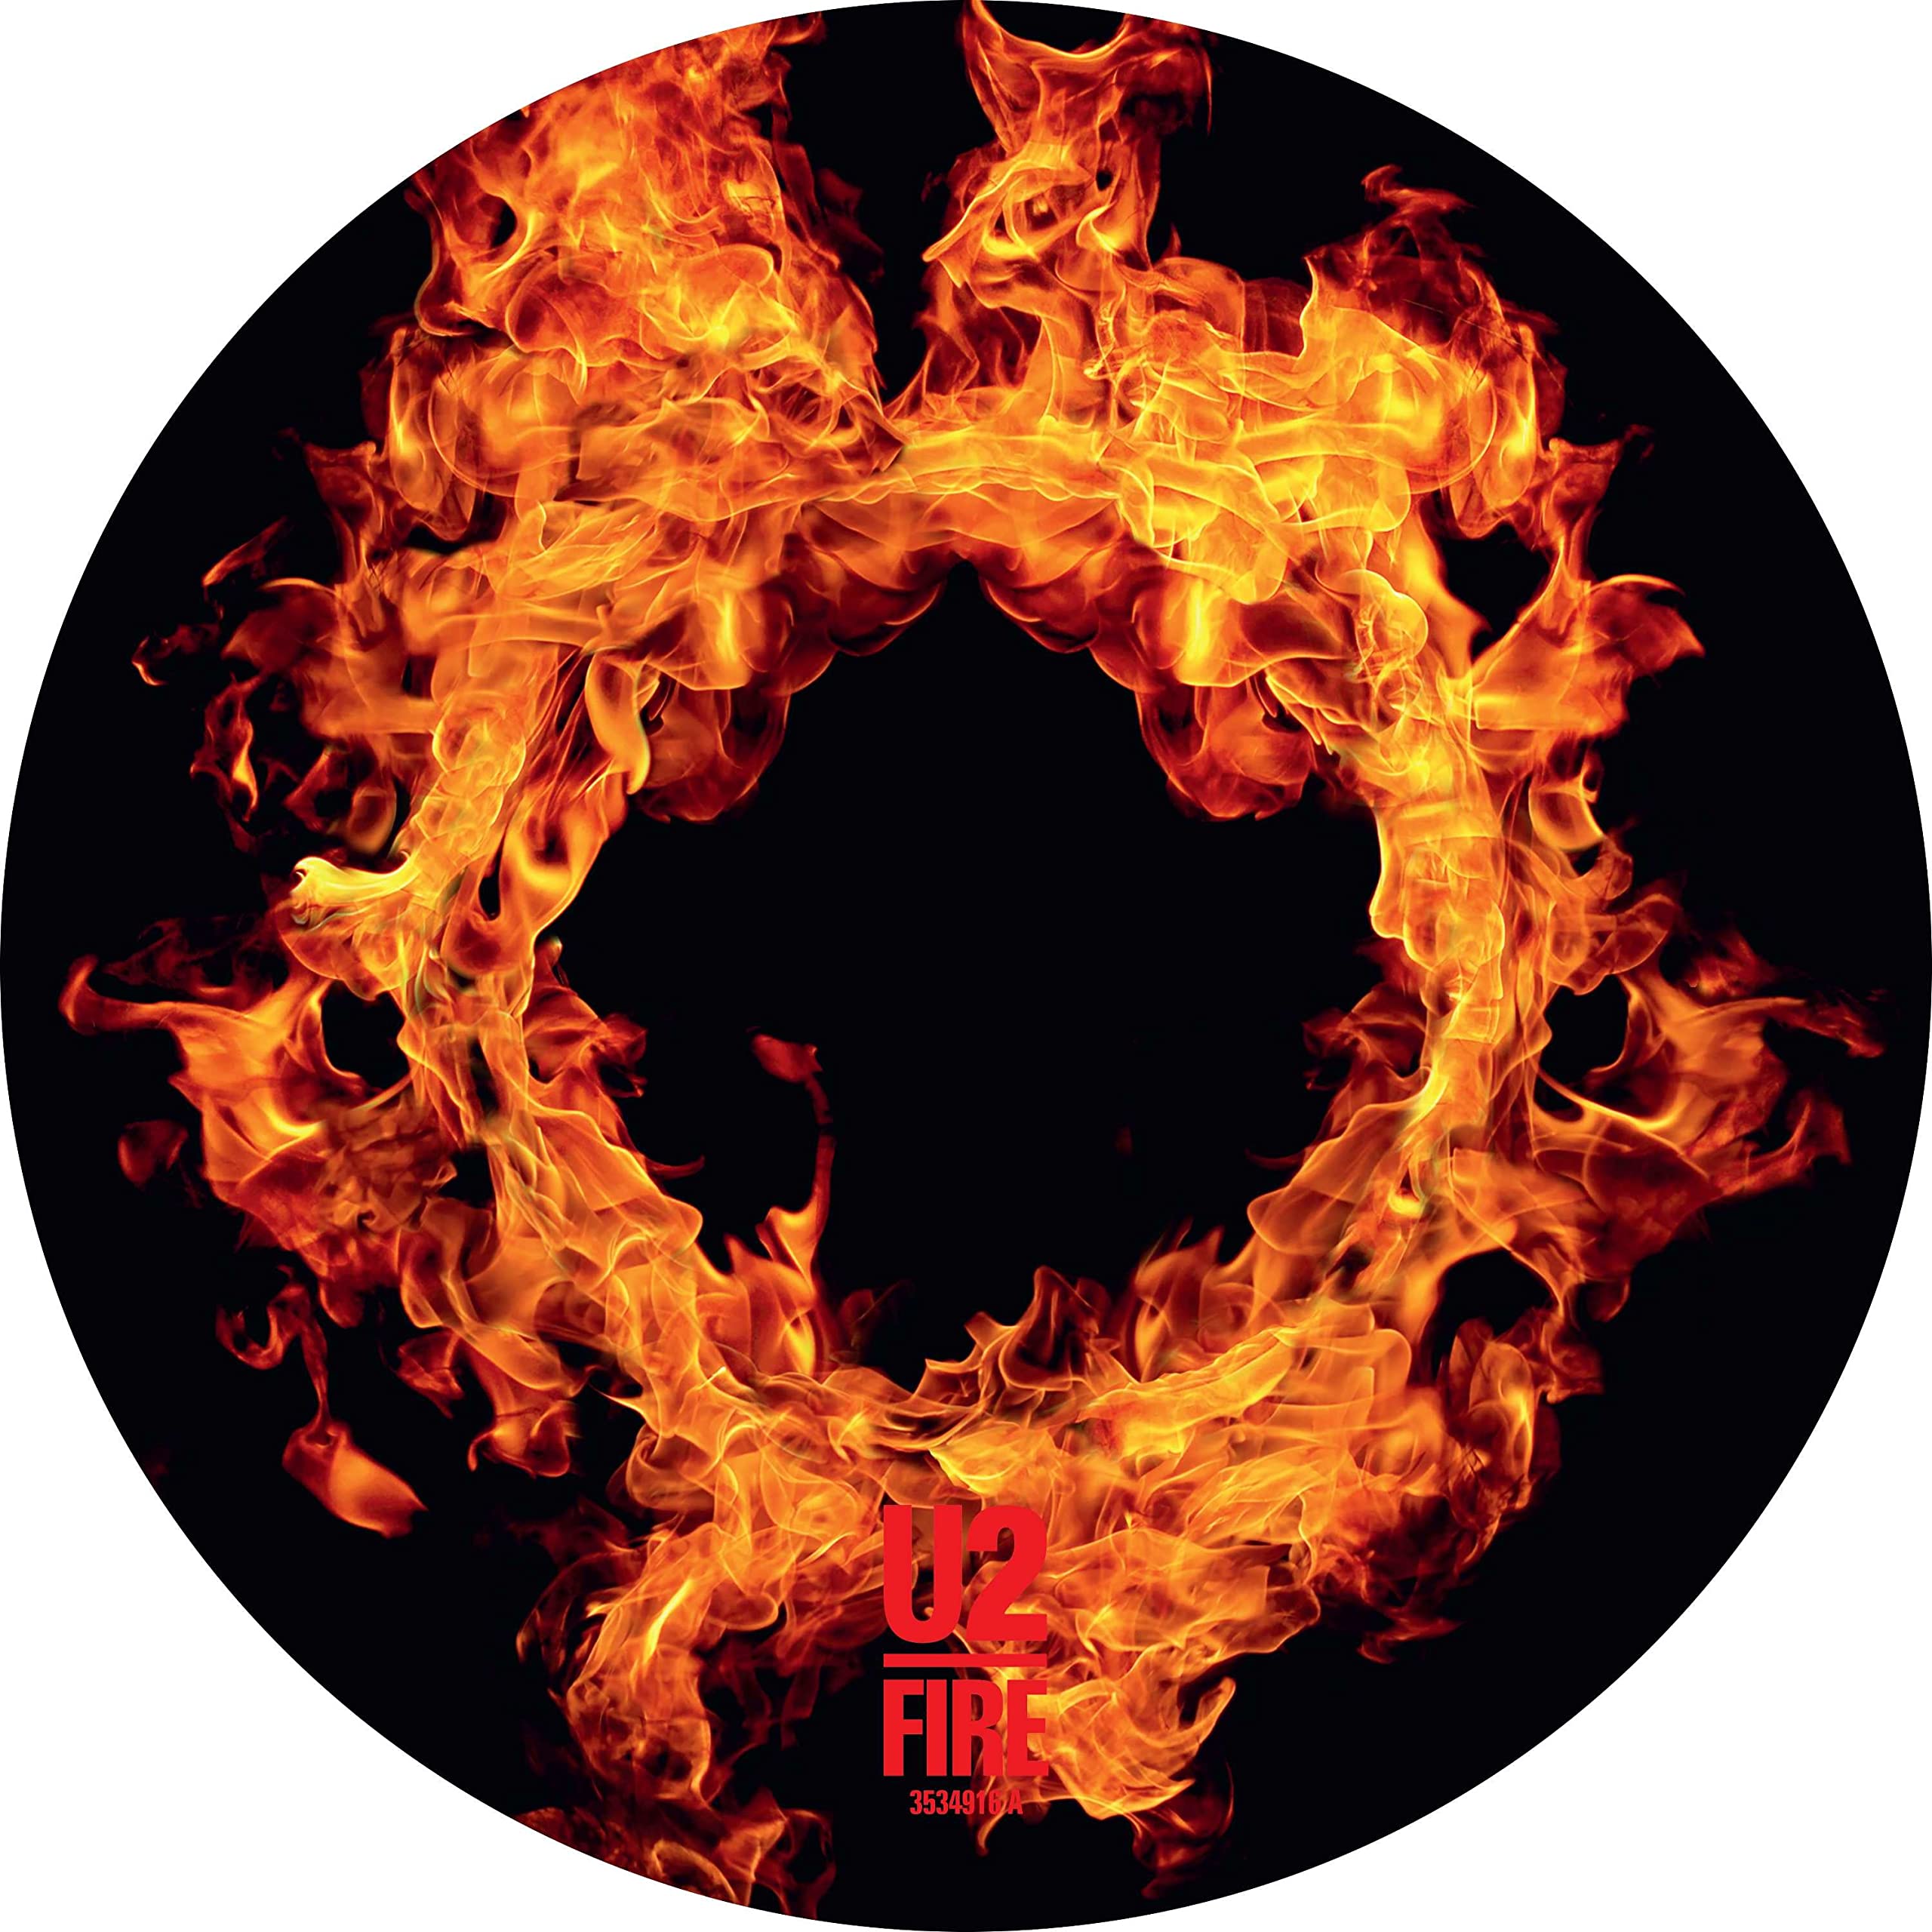 LP-U2-FIRE-40TH ANNIVERSARY EDITION -RSD 2021 -LP